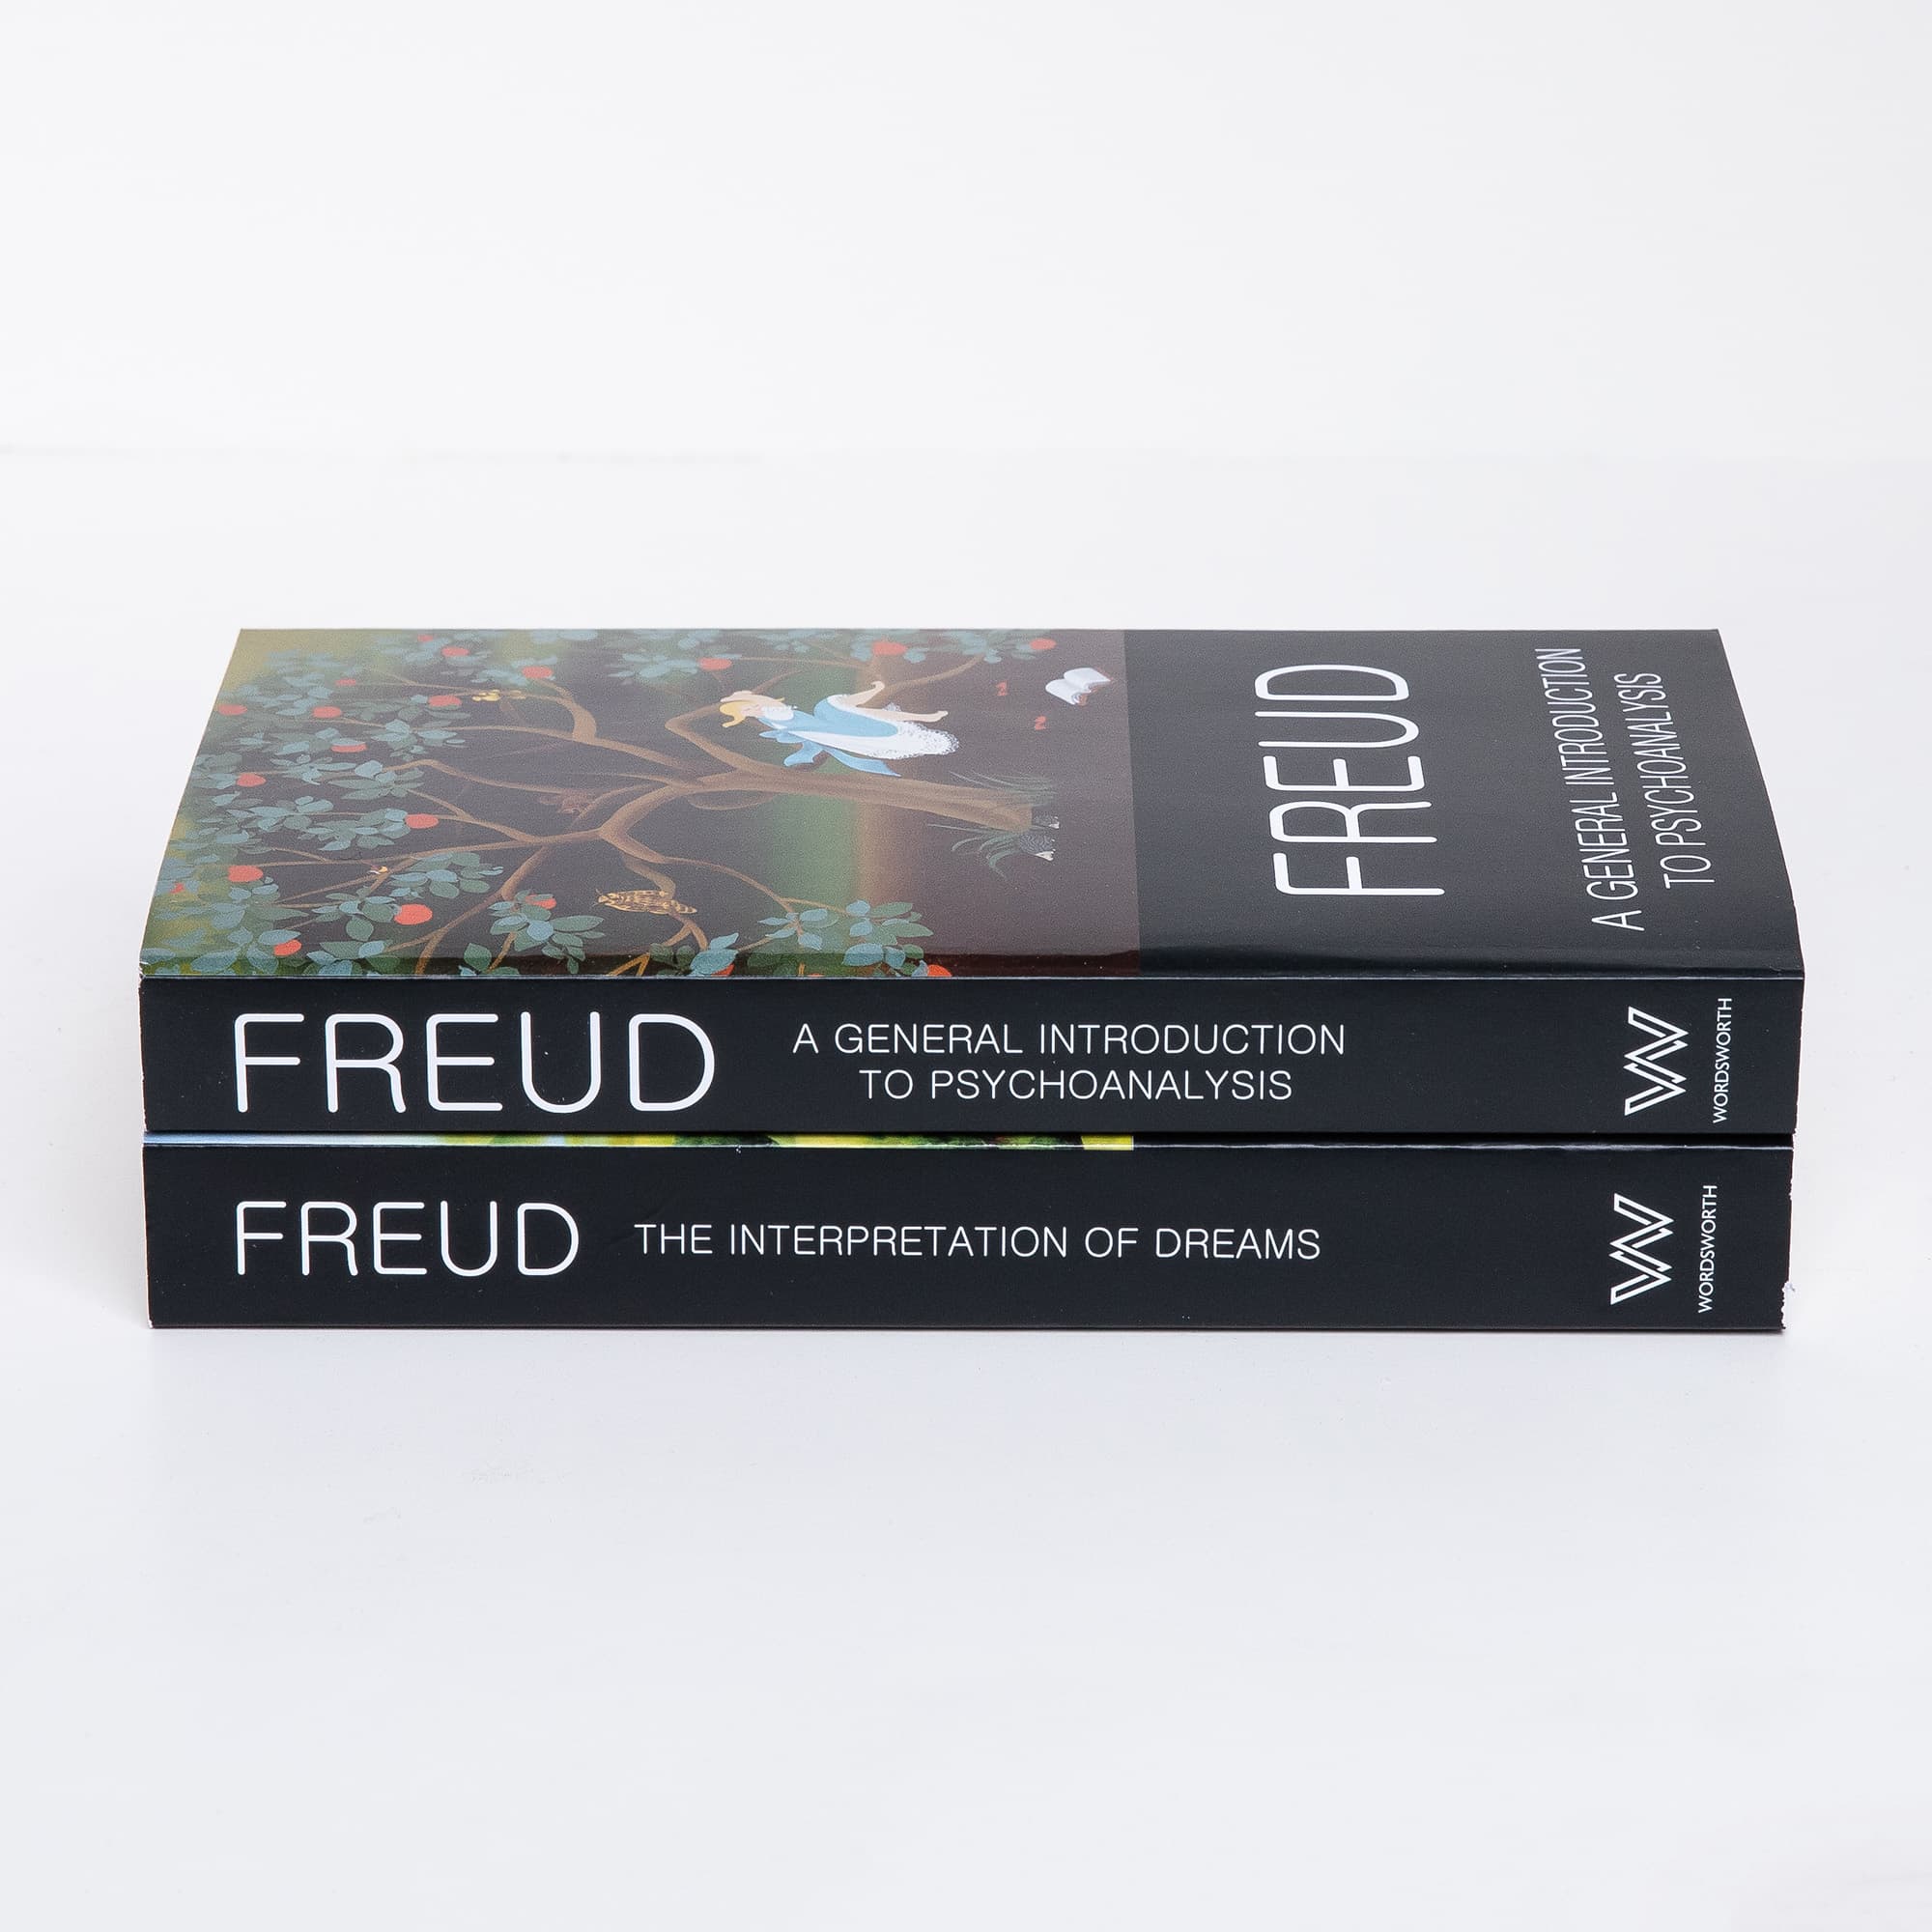 Freud book stack